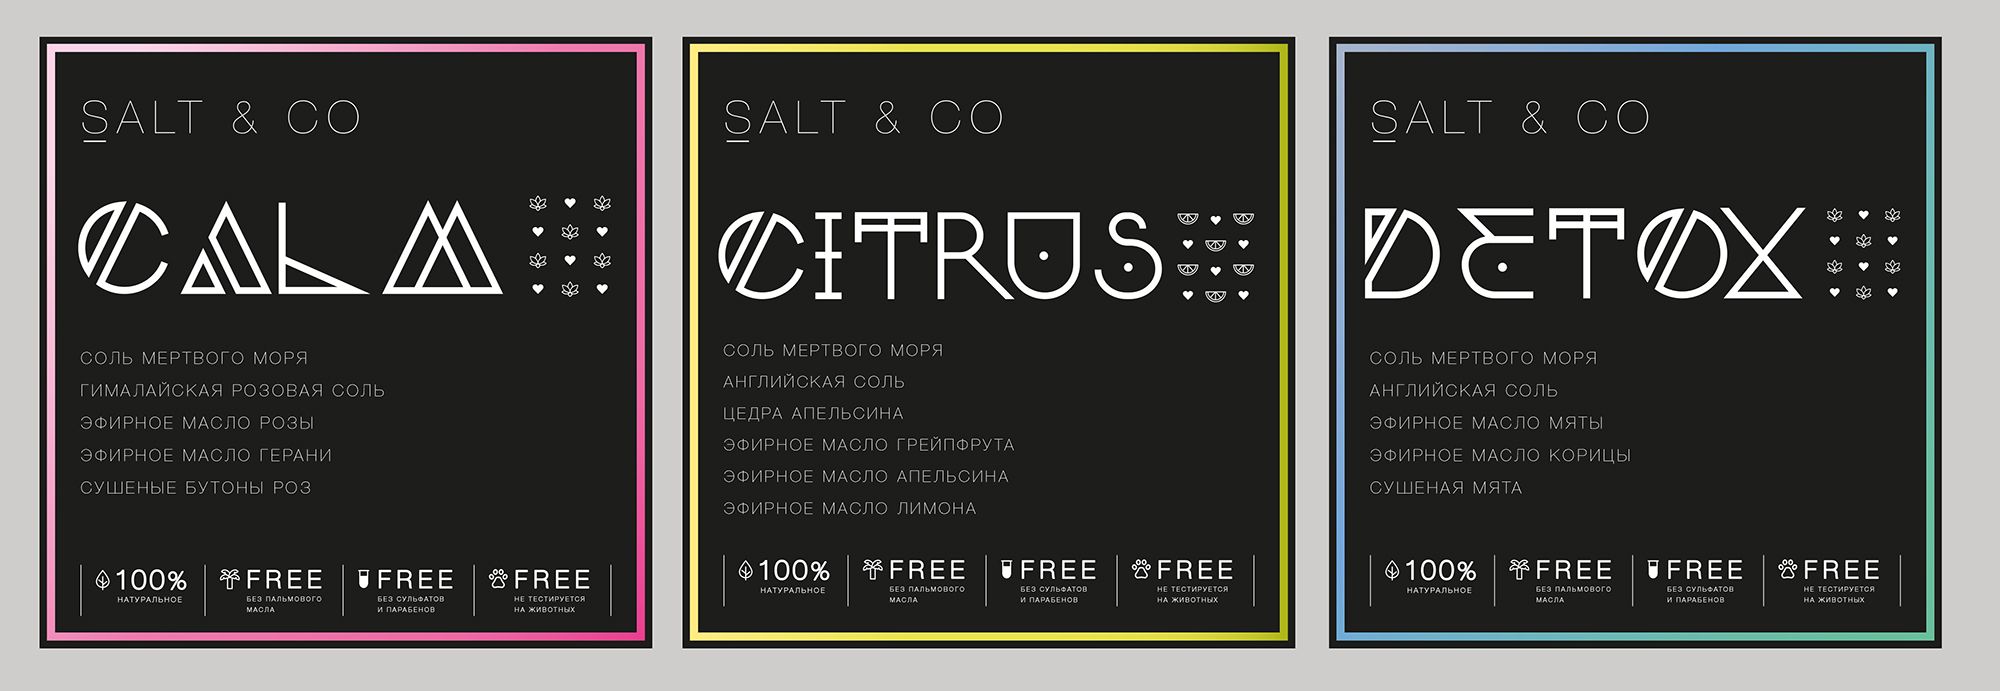 Упаковка соли для ванн Salt & Co. - дизайнер Eanisenkova